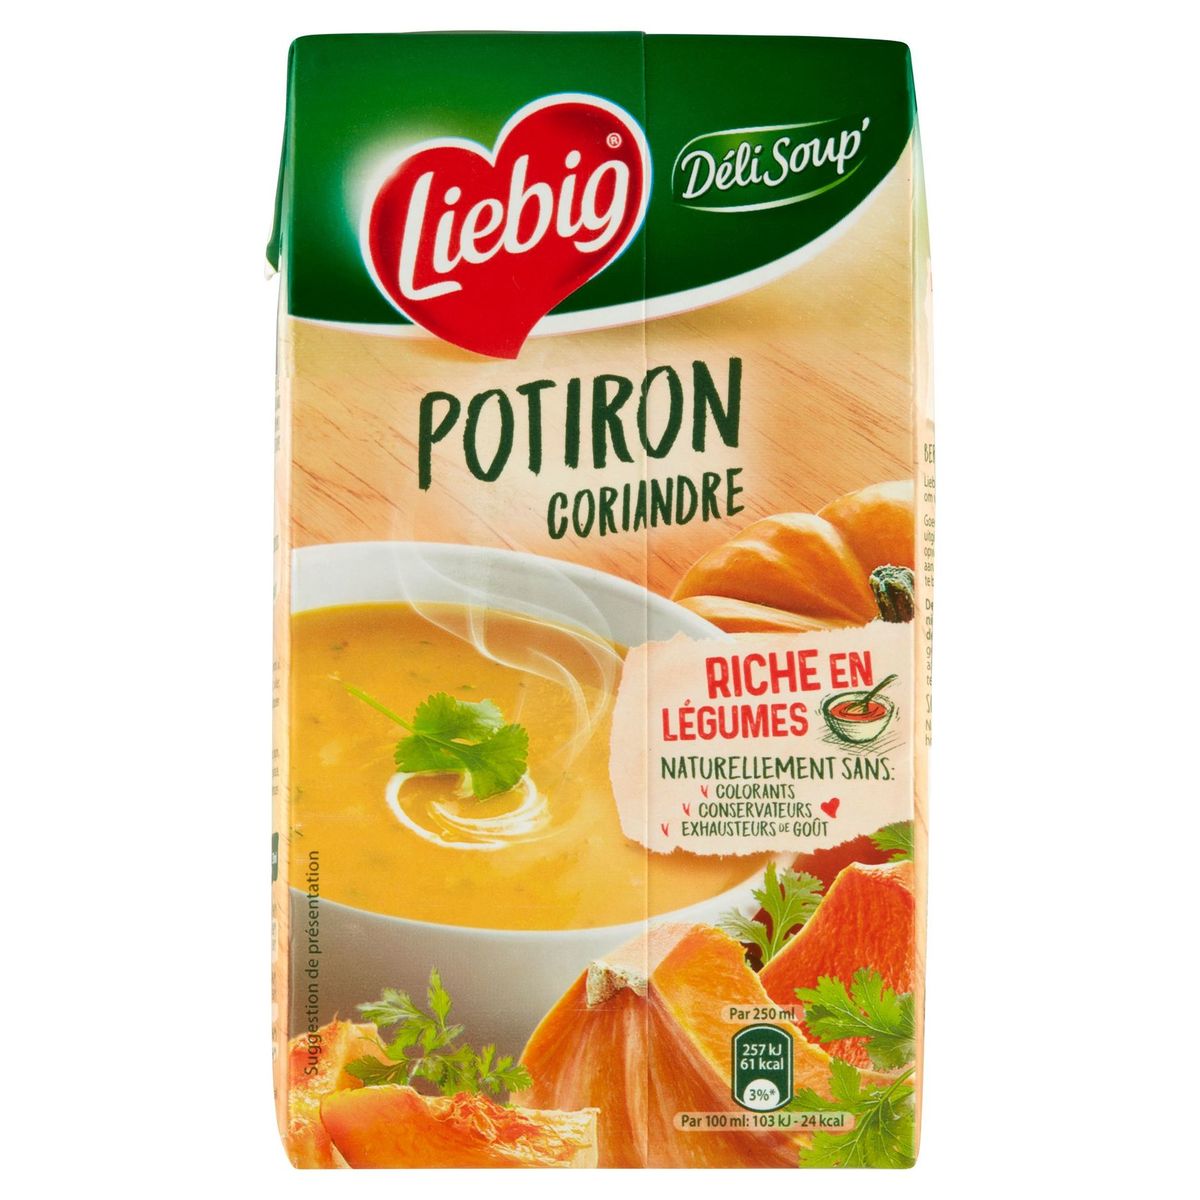 Liebig Déli Soup' Pompoen Koriander 1 L